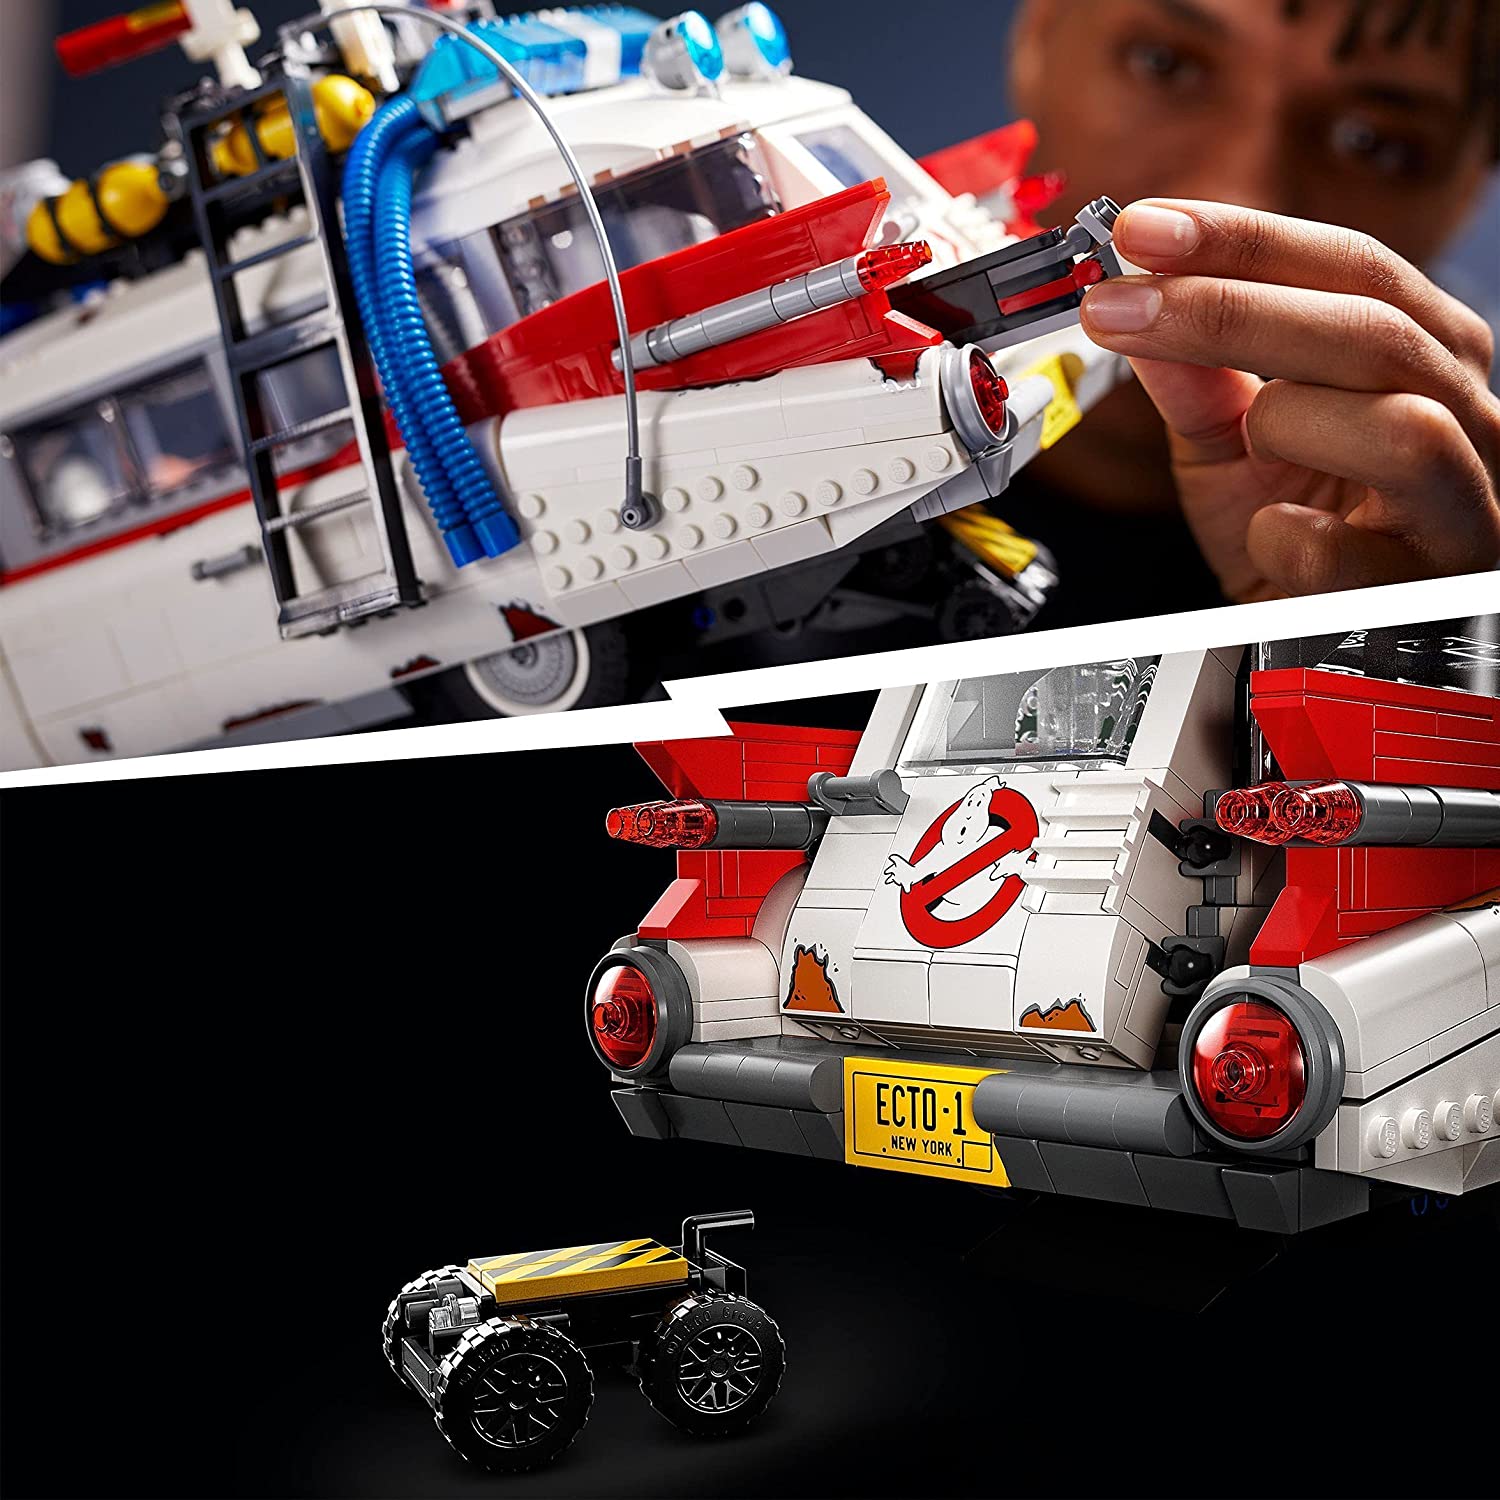 LEGO Creator Expert - Ghostbusters ECTO-1 10274